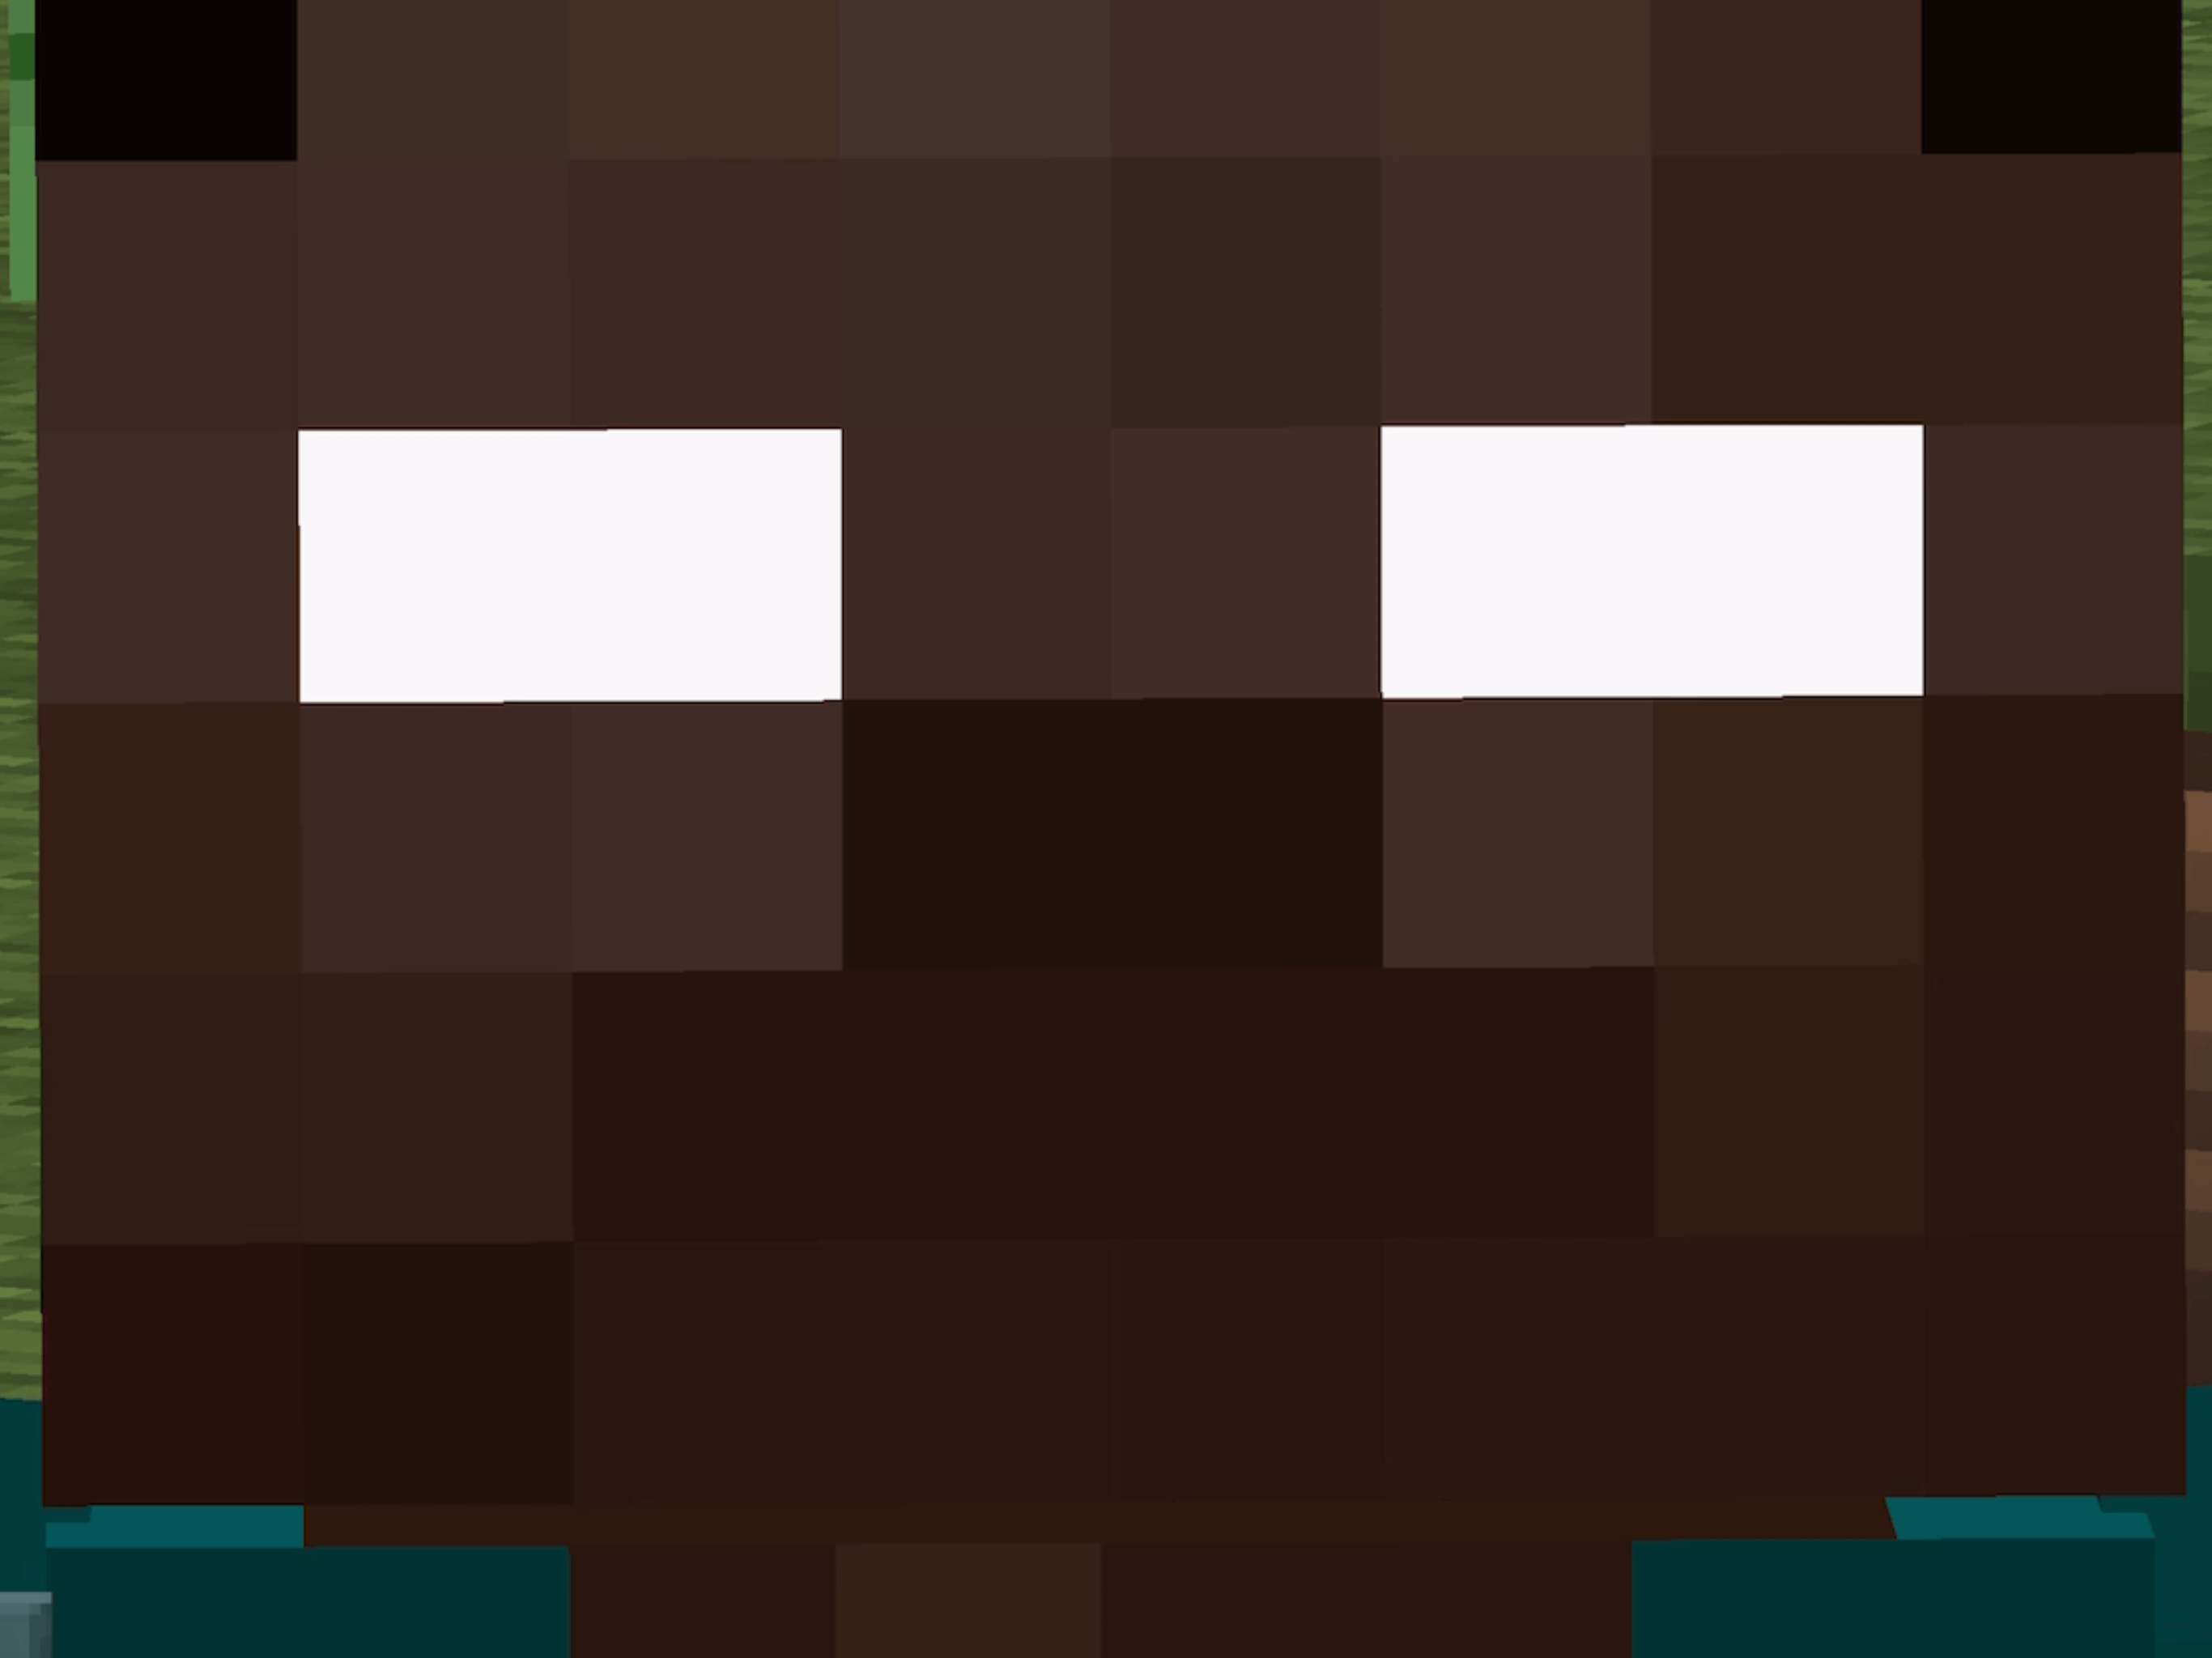 The minecraft account named Mojang has a Herobrine Skin : r